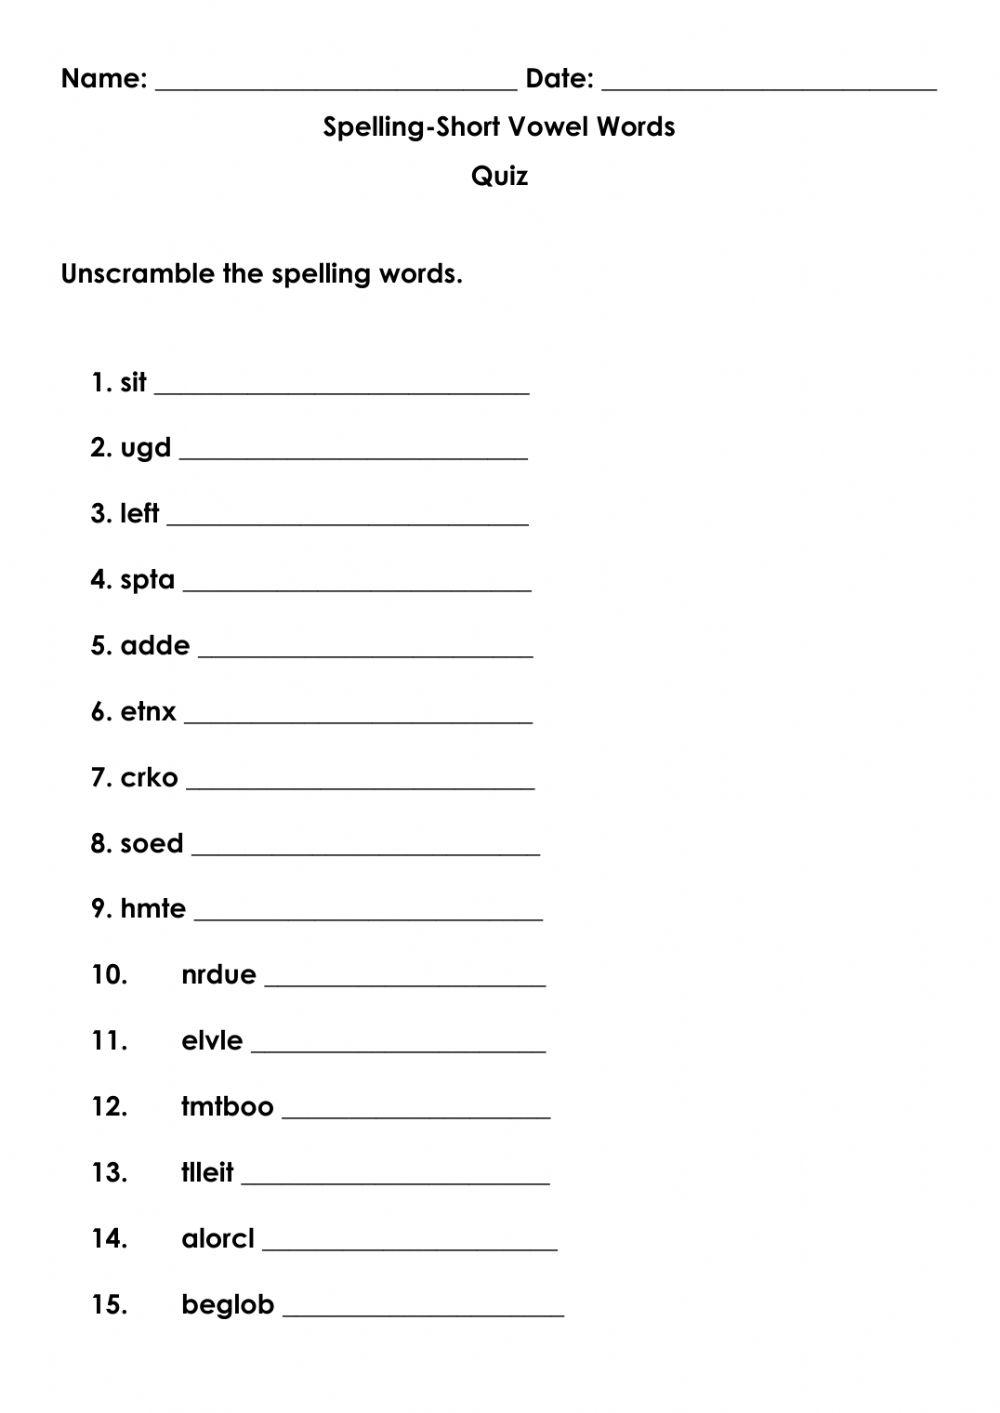 Short Vowel Spelling Word Quiz